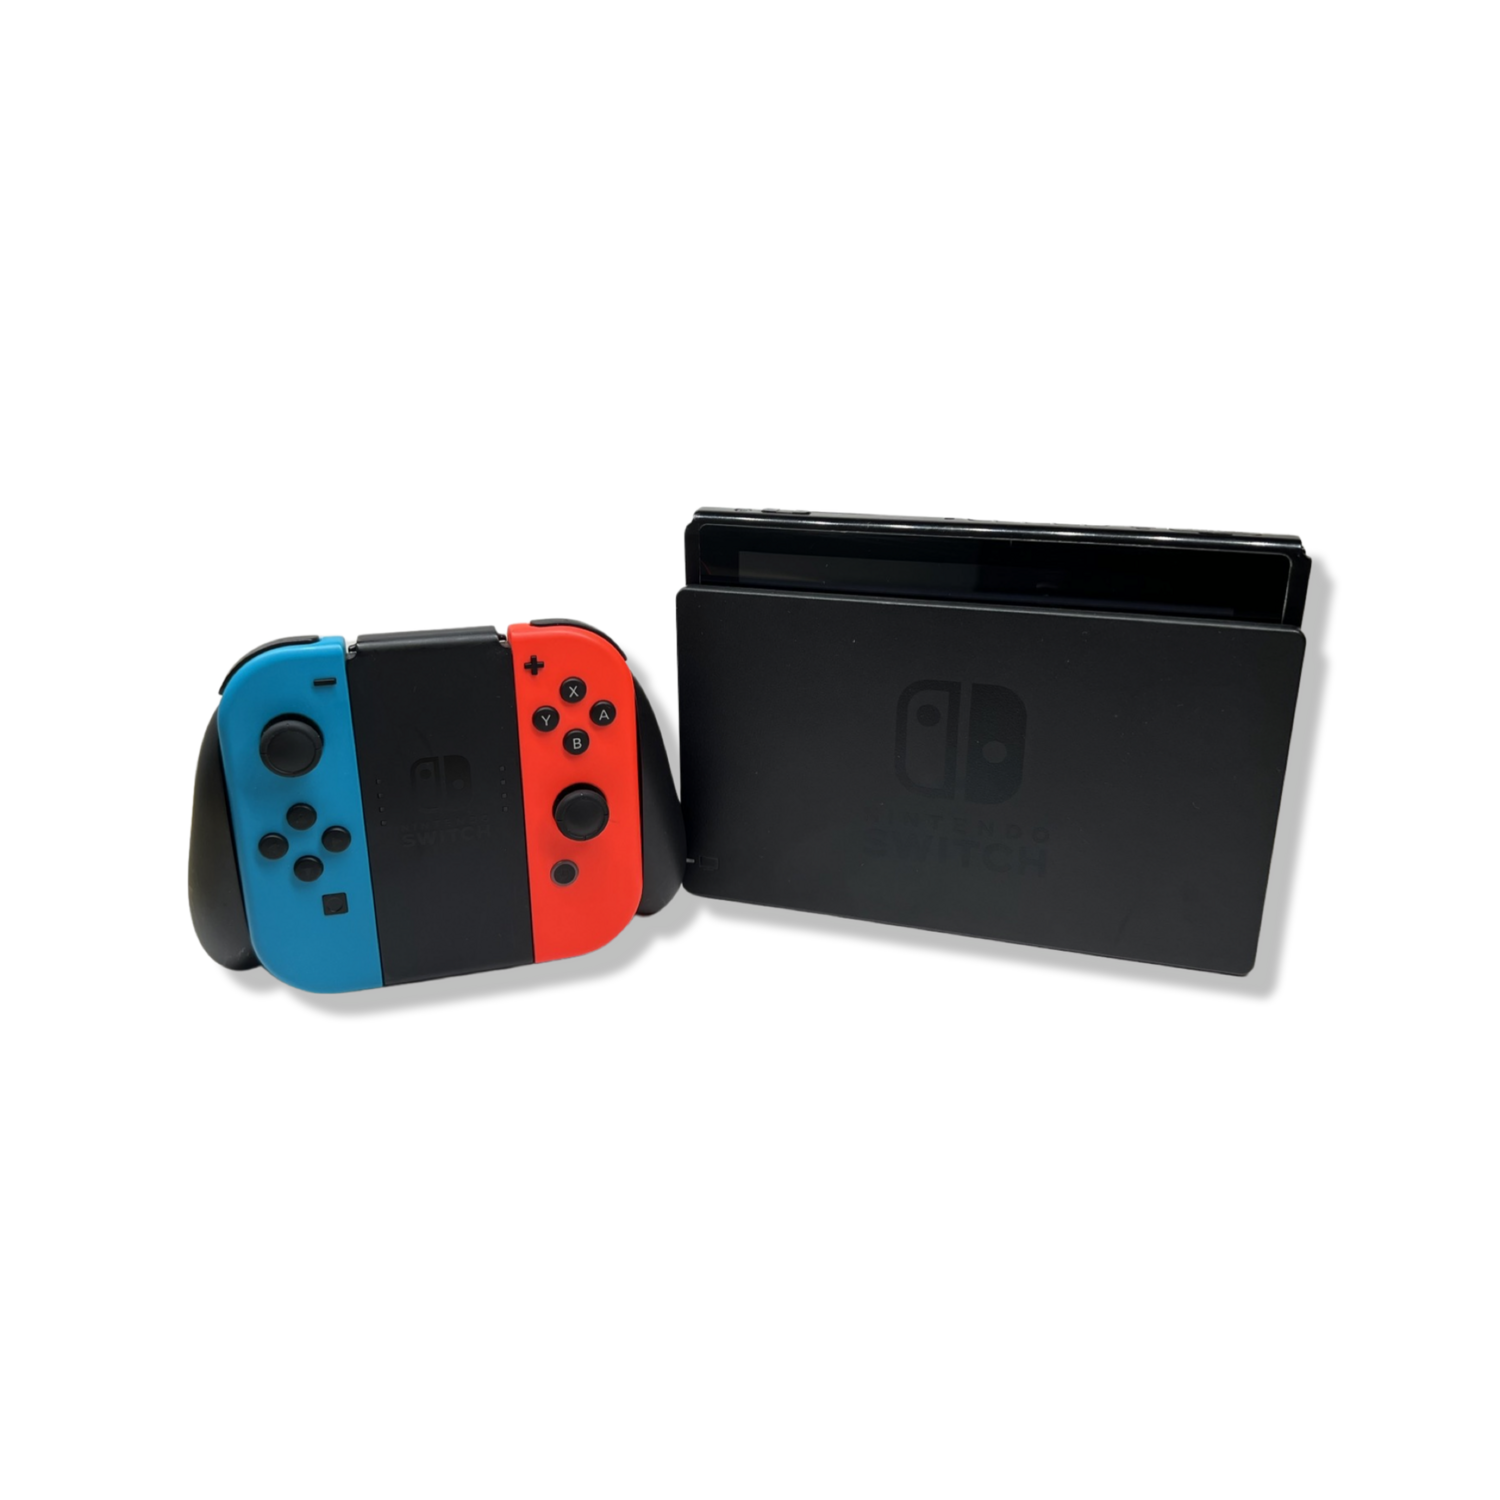 Nintendo Switch Konsole V2 - Neon-Rot/Neon-Blau - sehr gut - ohne OVP